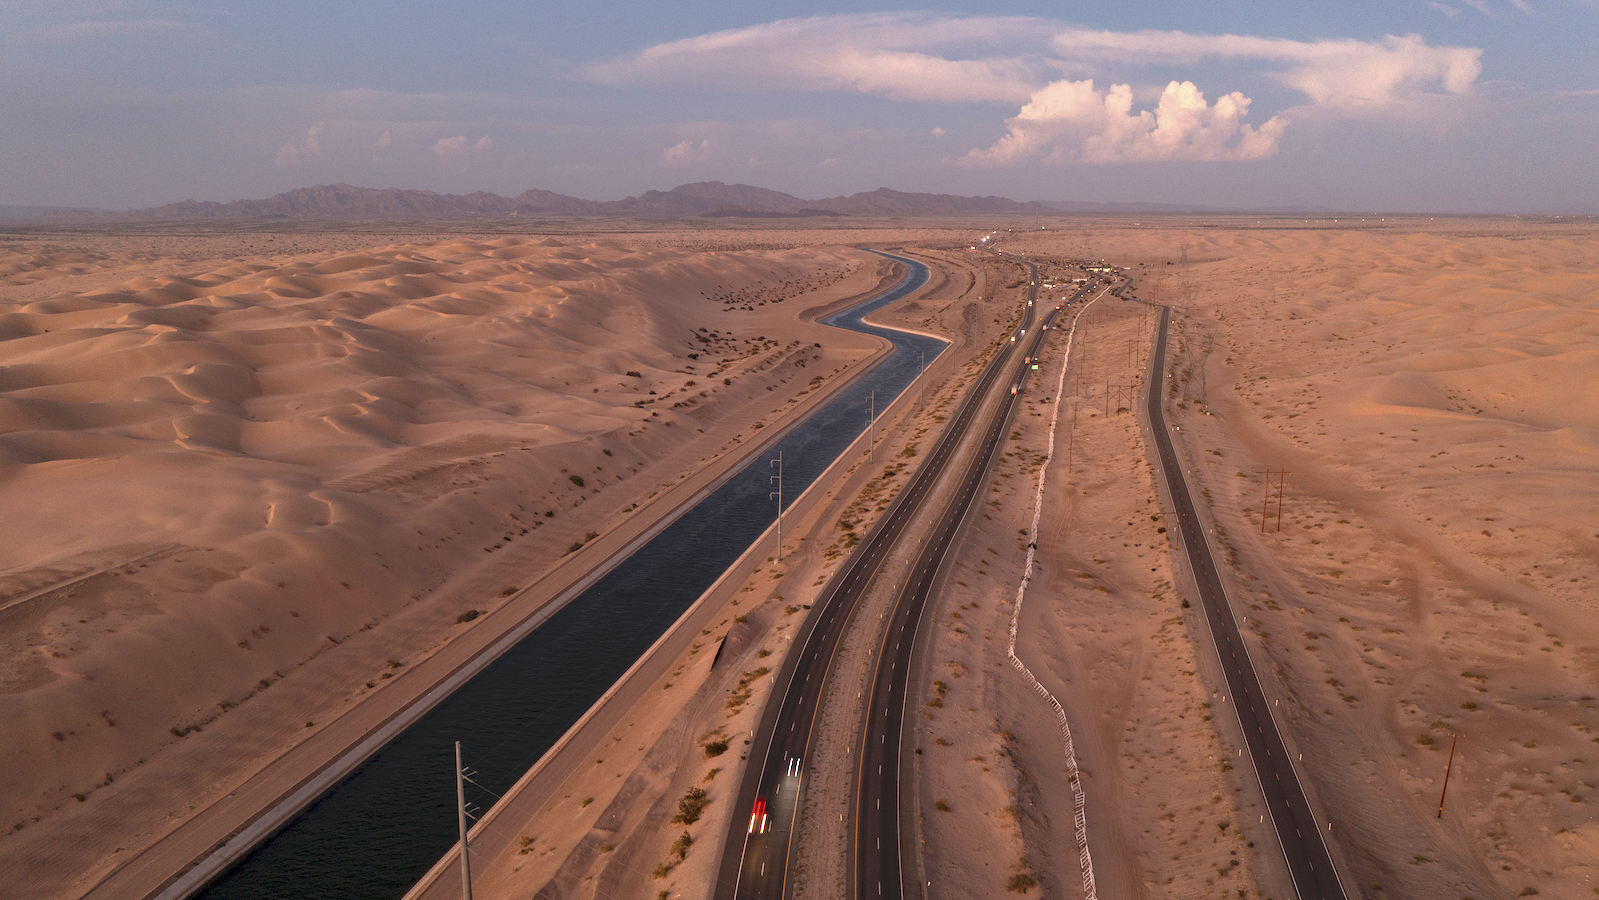 A road stretches through the desert